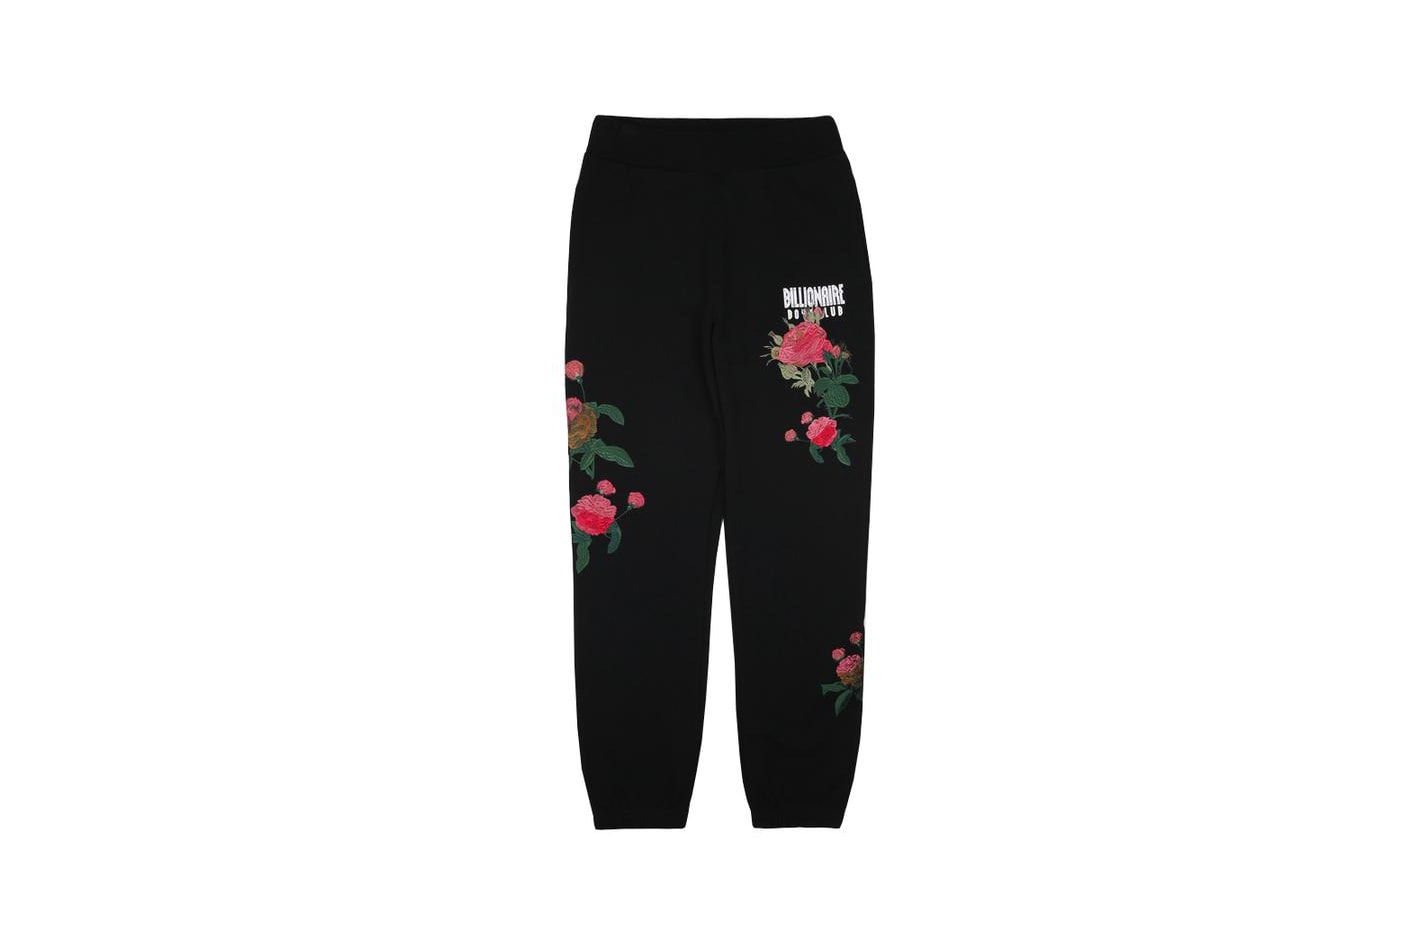 Billionaire Boys Club Spring 2018 Embroidered Floral Sweatpants Black